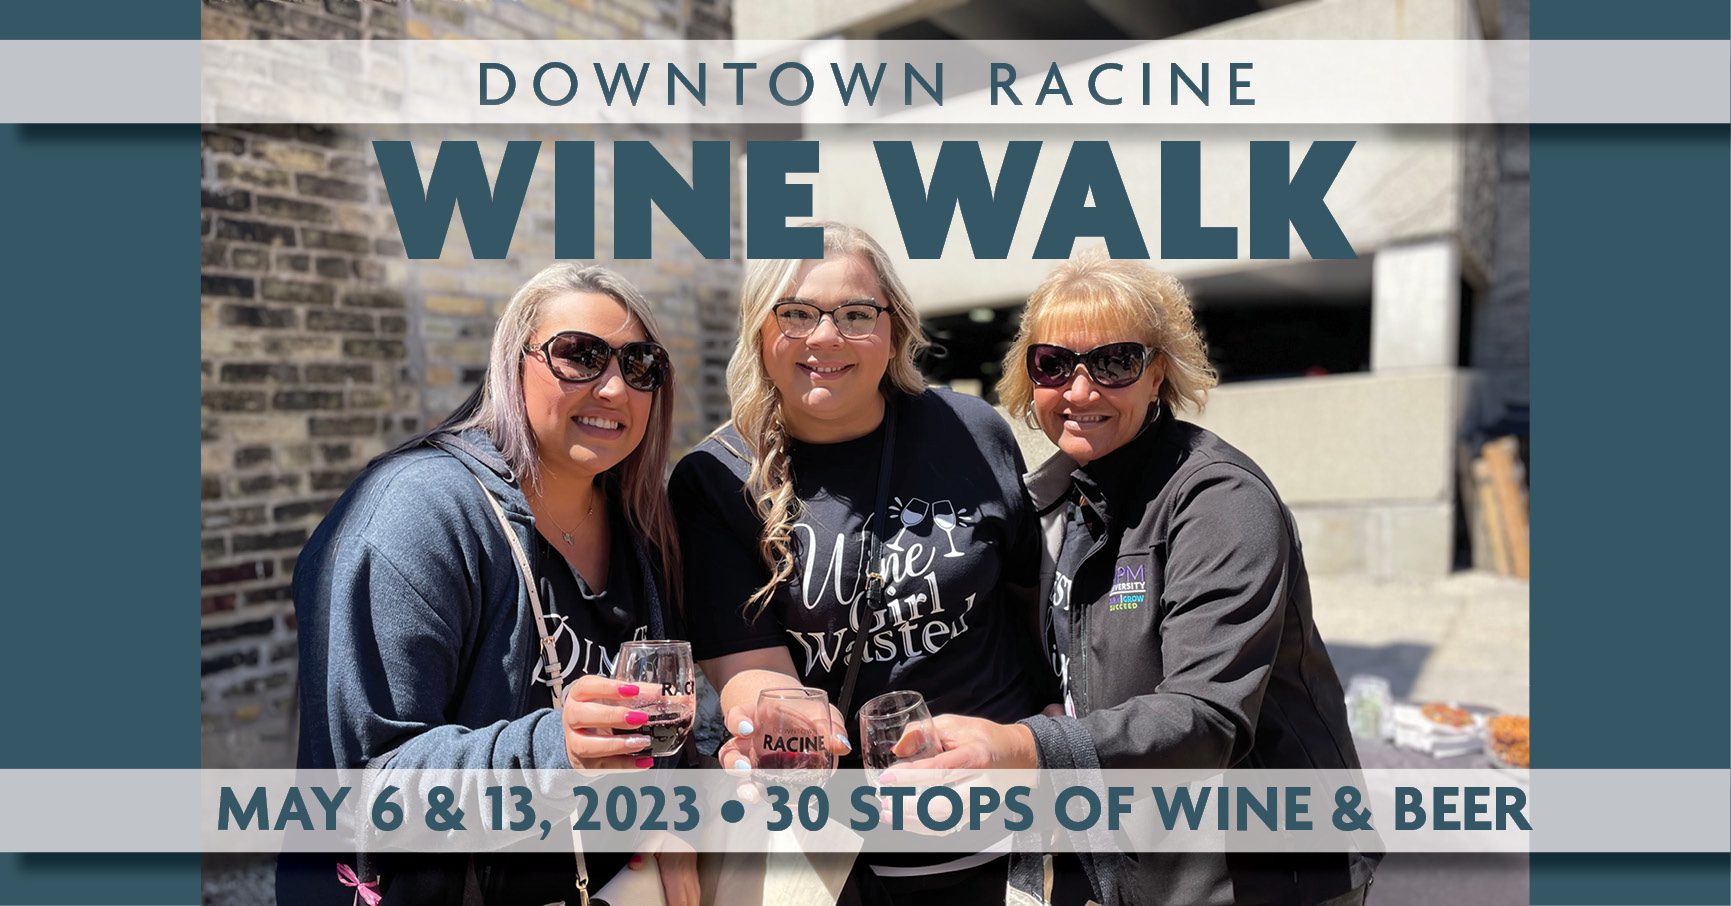 Wine Walk Downtown Racine Corporation